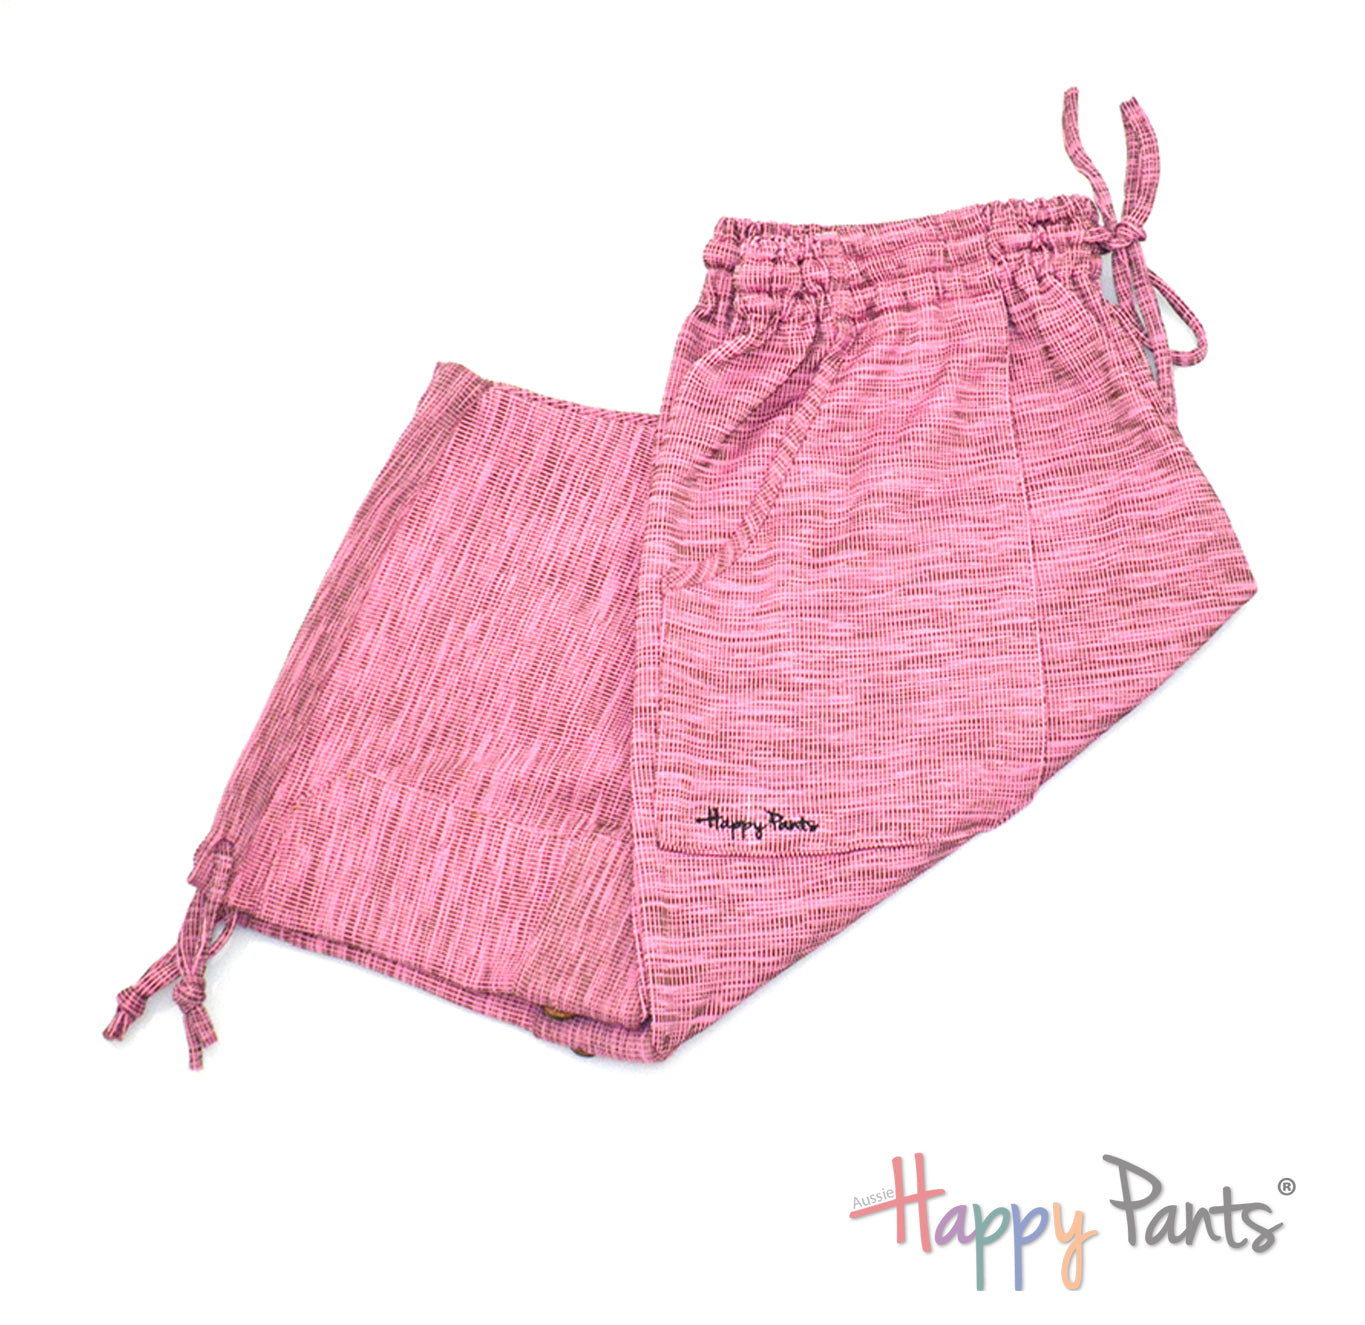 Colourful shorts for men cotton boardshorts comfortable plus sizes Happy Pants